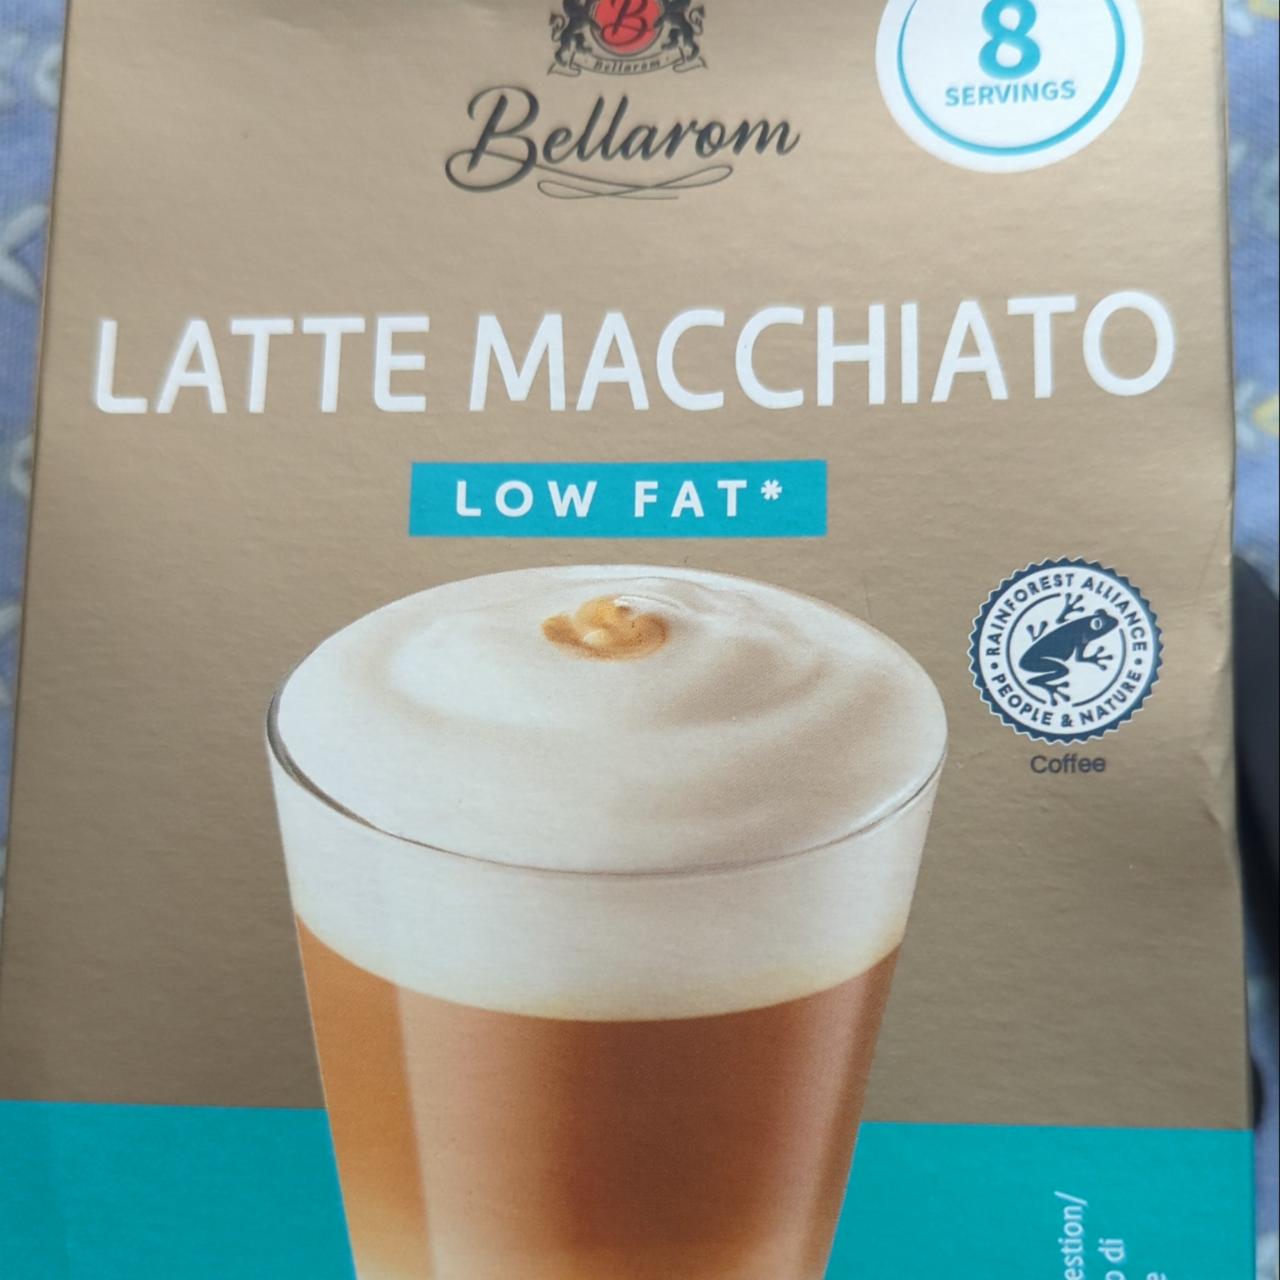 Fotografie - Latte Macchiato low fat Bellarom